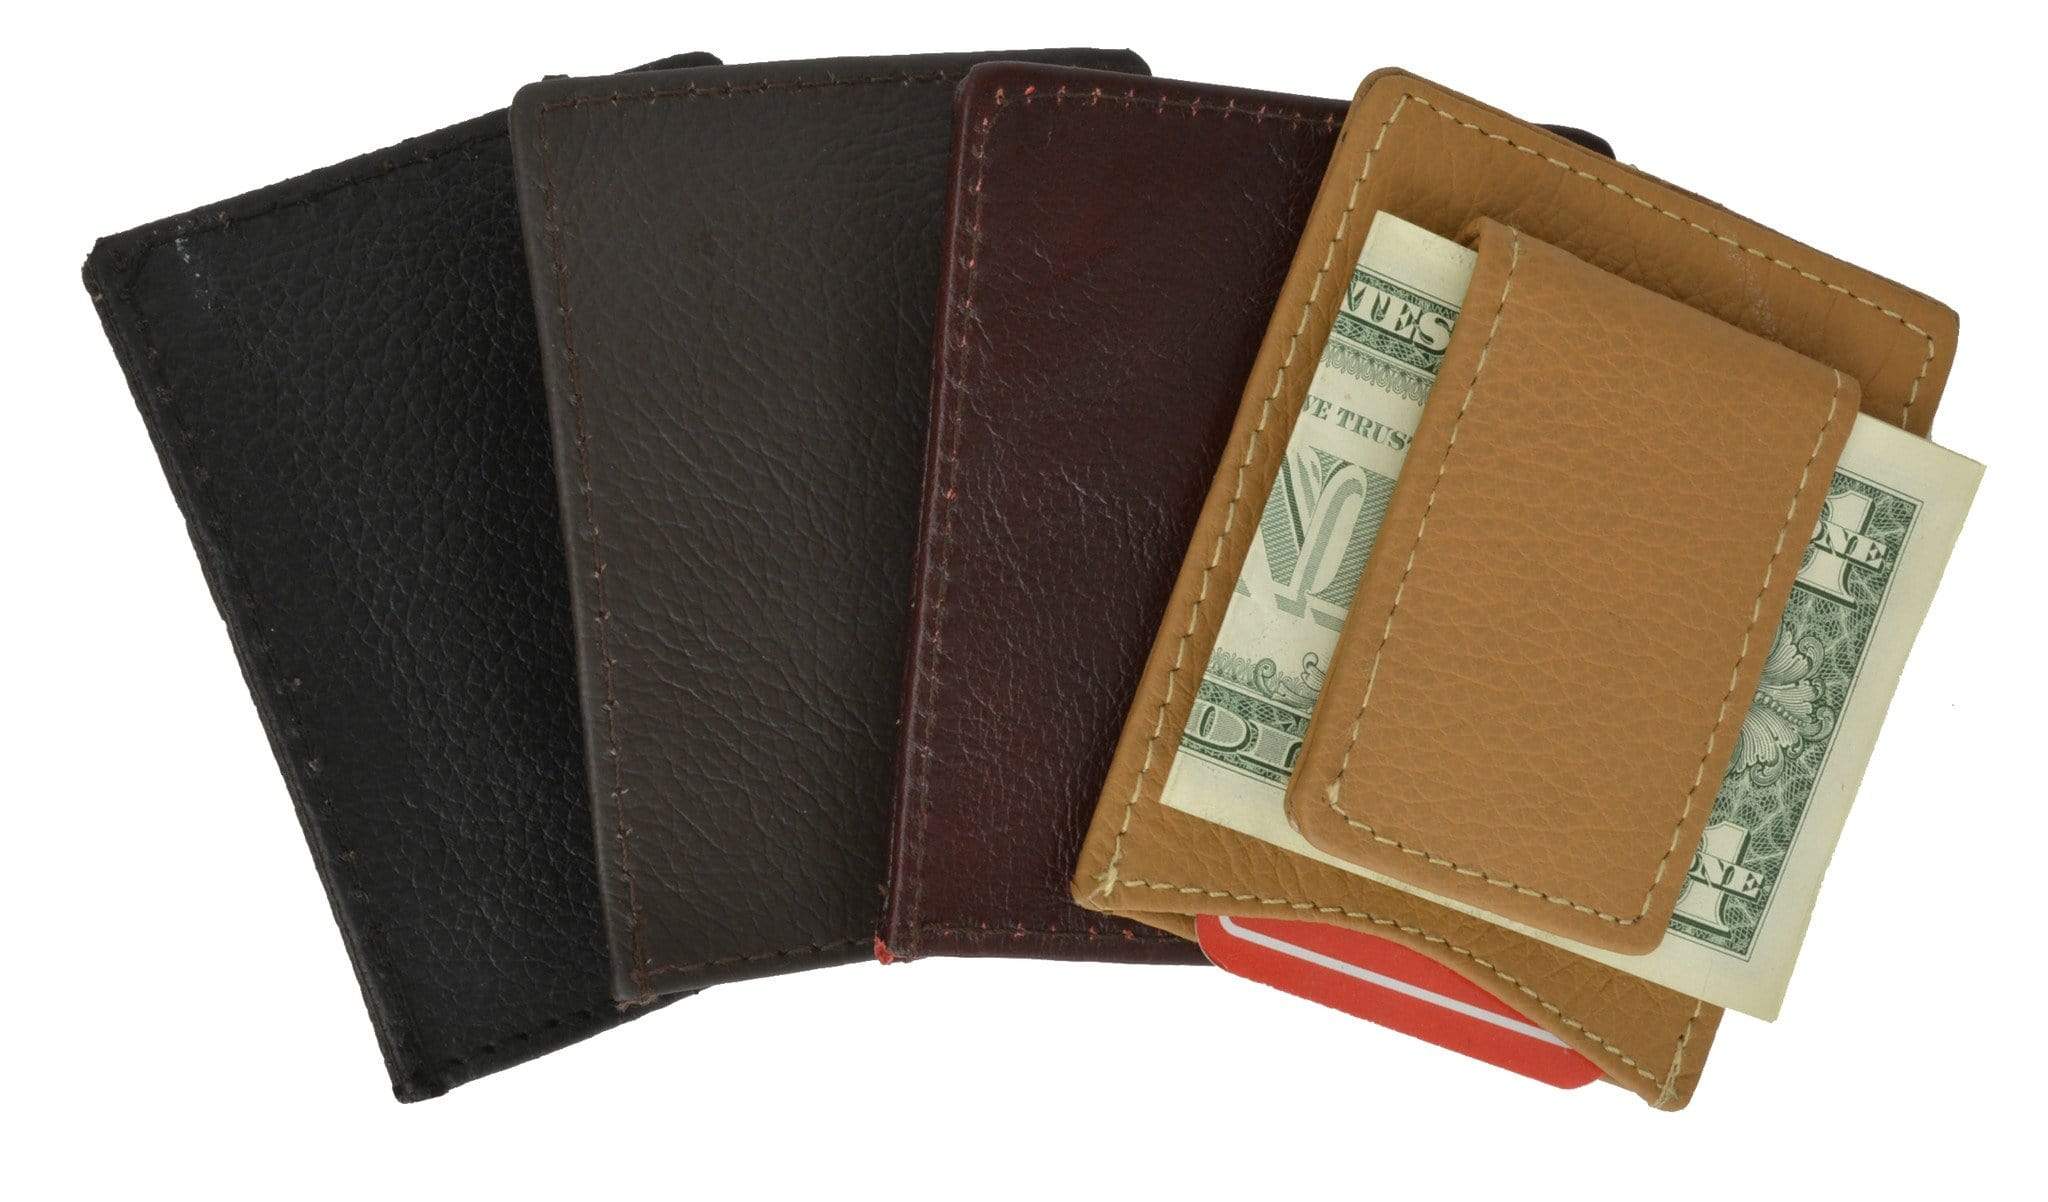 Buy USL Men's Money Clip Leather Bi-Fold Slim Wallet with Card Holder &  Money Clipper (Beige) at .in